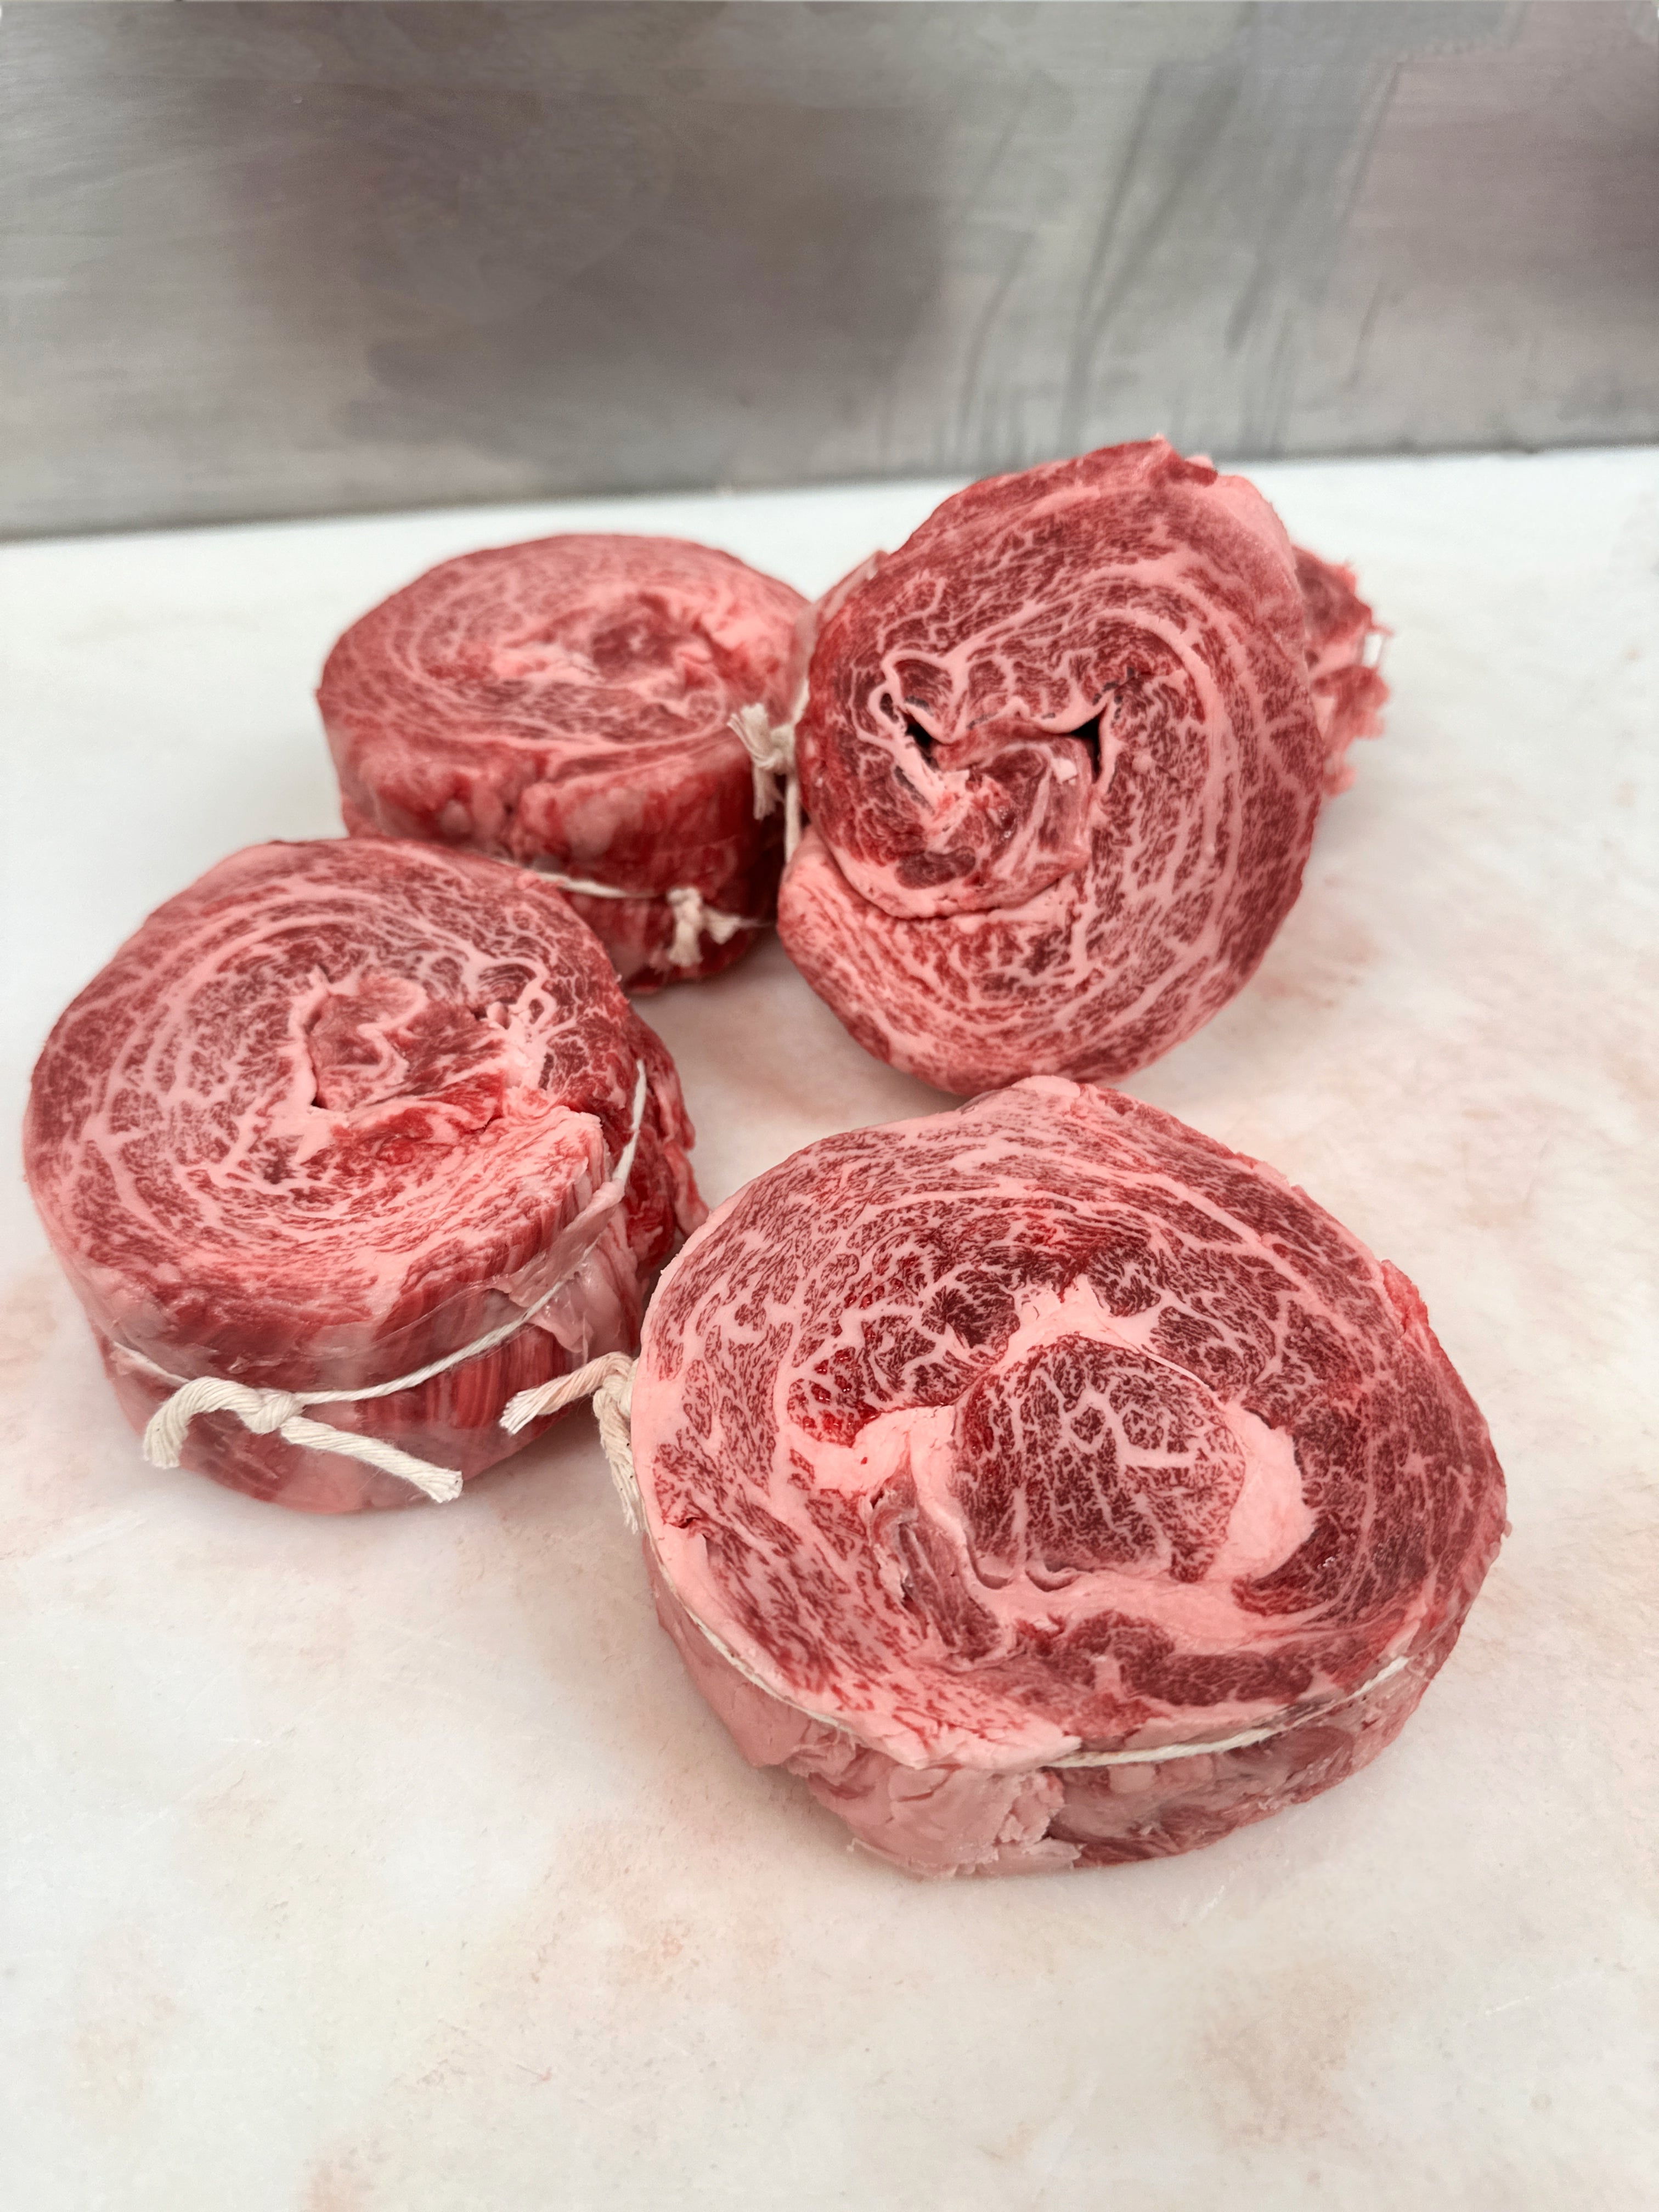 Buy A5 Japanese Wagyu Ribeye Steak